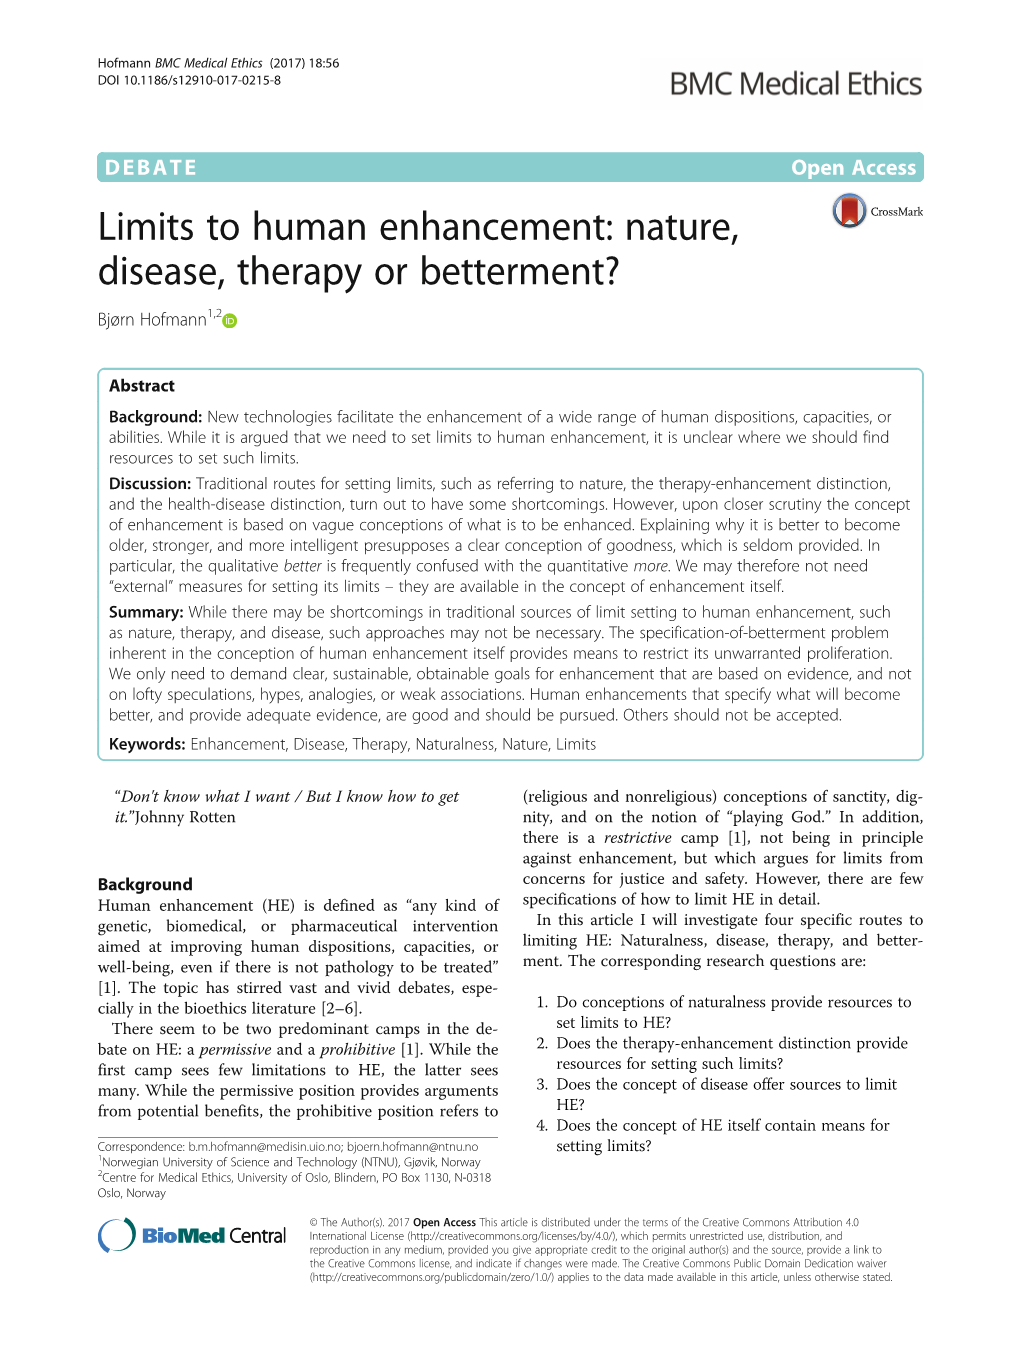 Limits to Human Enhancement: Nature, Disease, Therapy Or Betterment? Bjørn Hofmann1,2